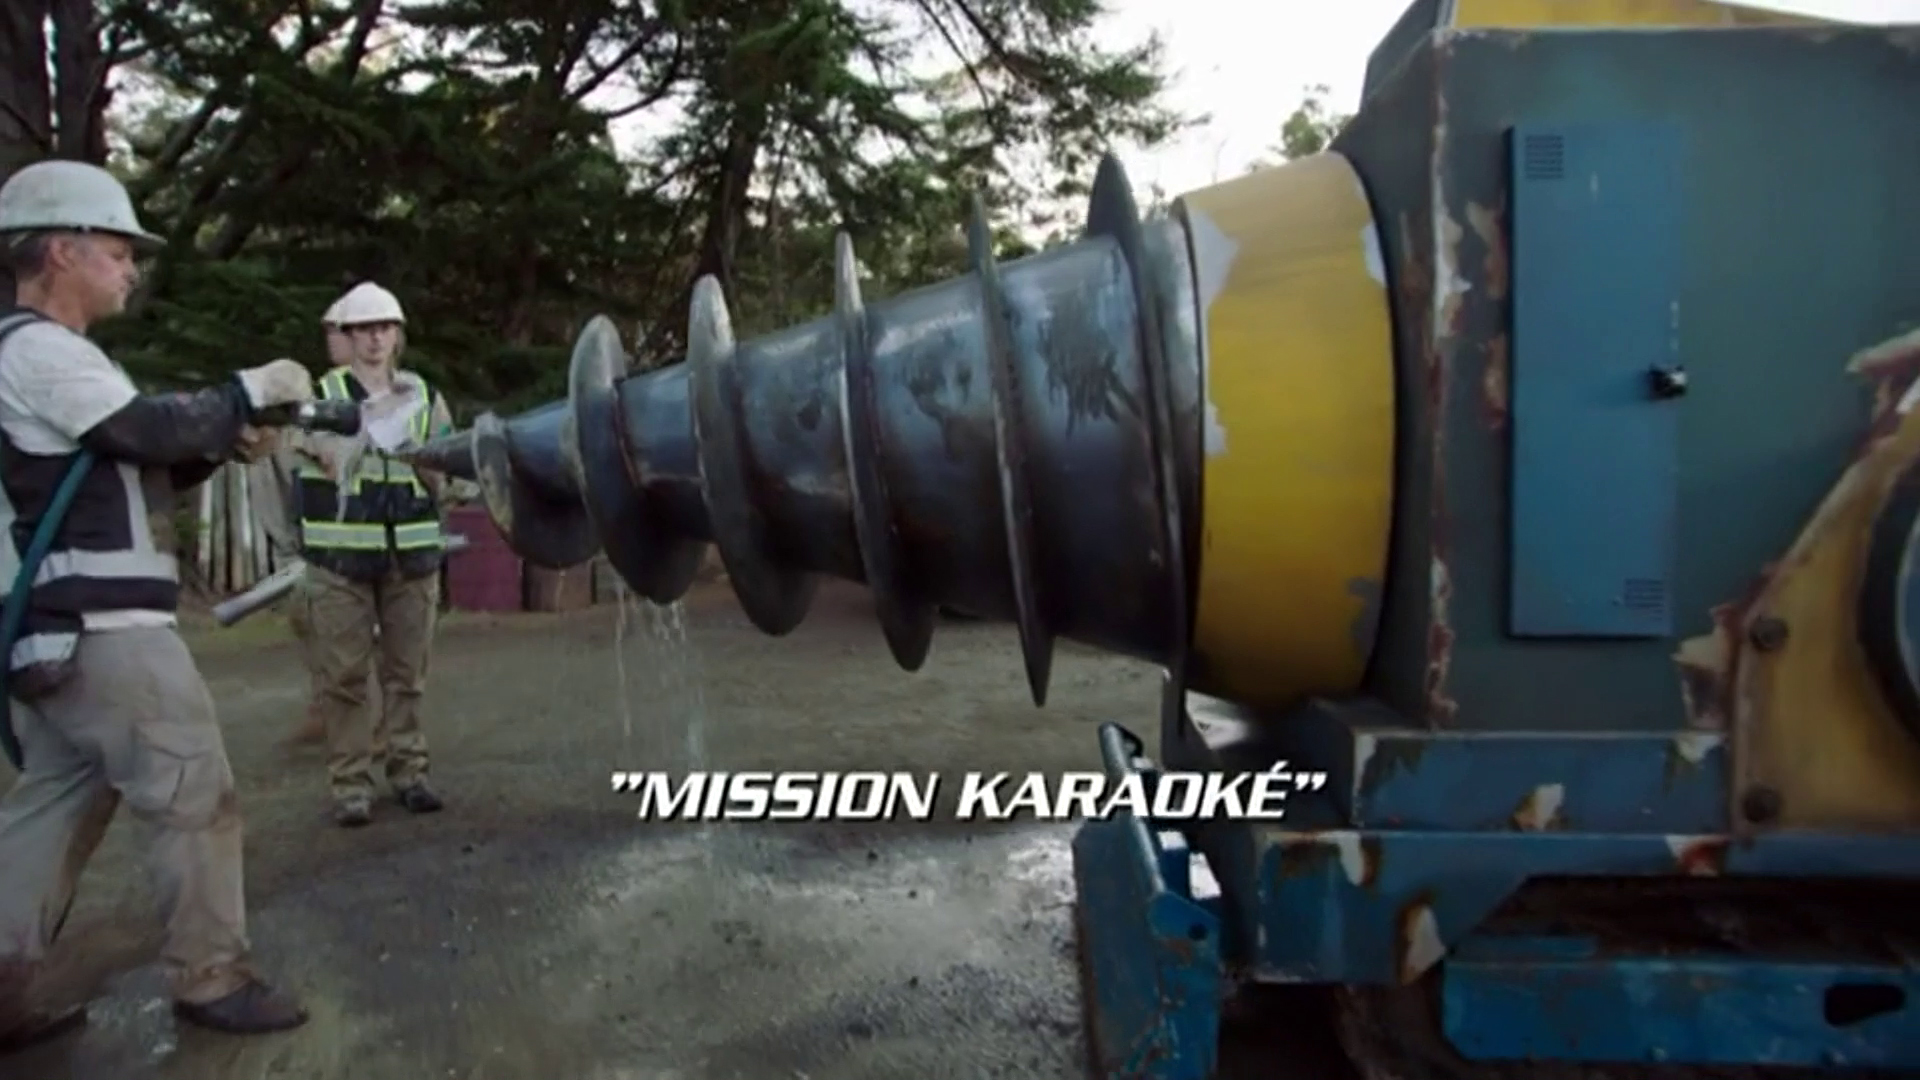 Mission karaoké